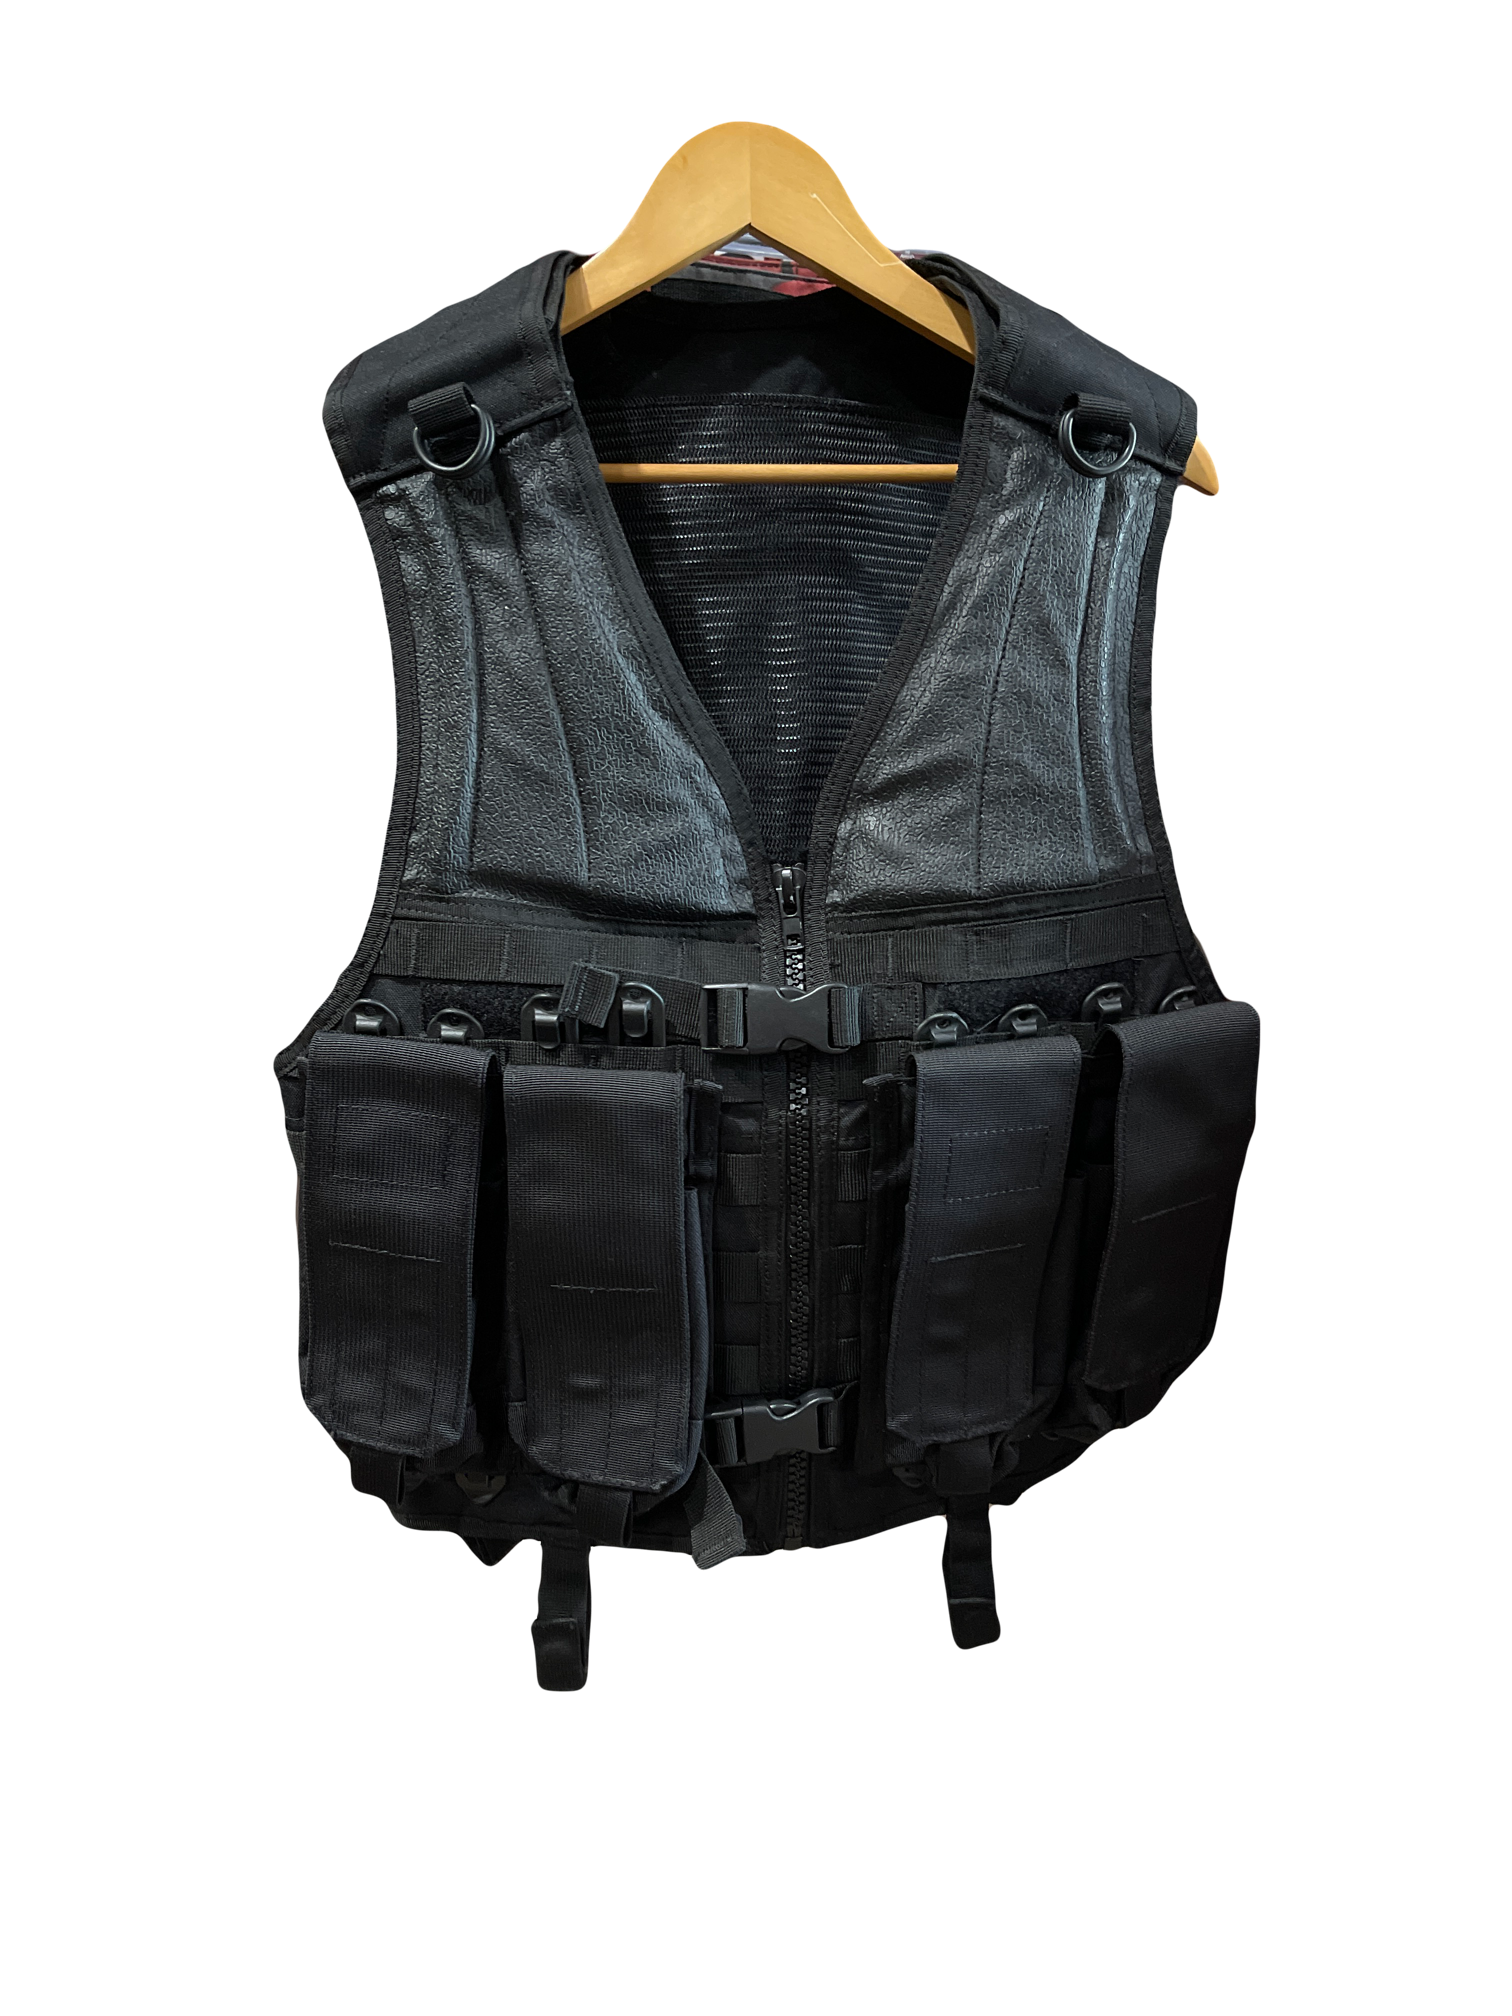 Blackhawk Blackhawk Strike Black Tactical Vest with Mag Pouches - Used